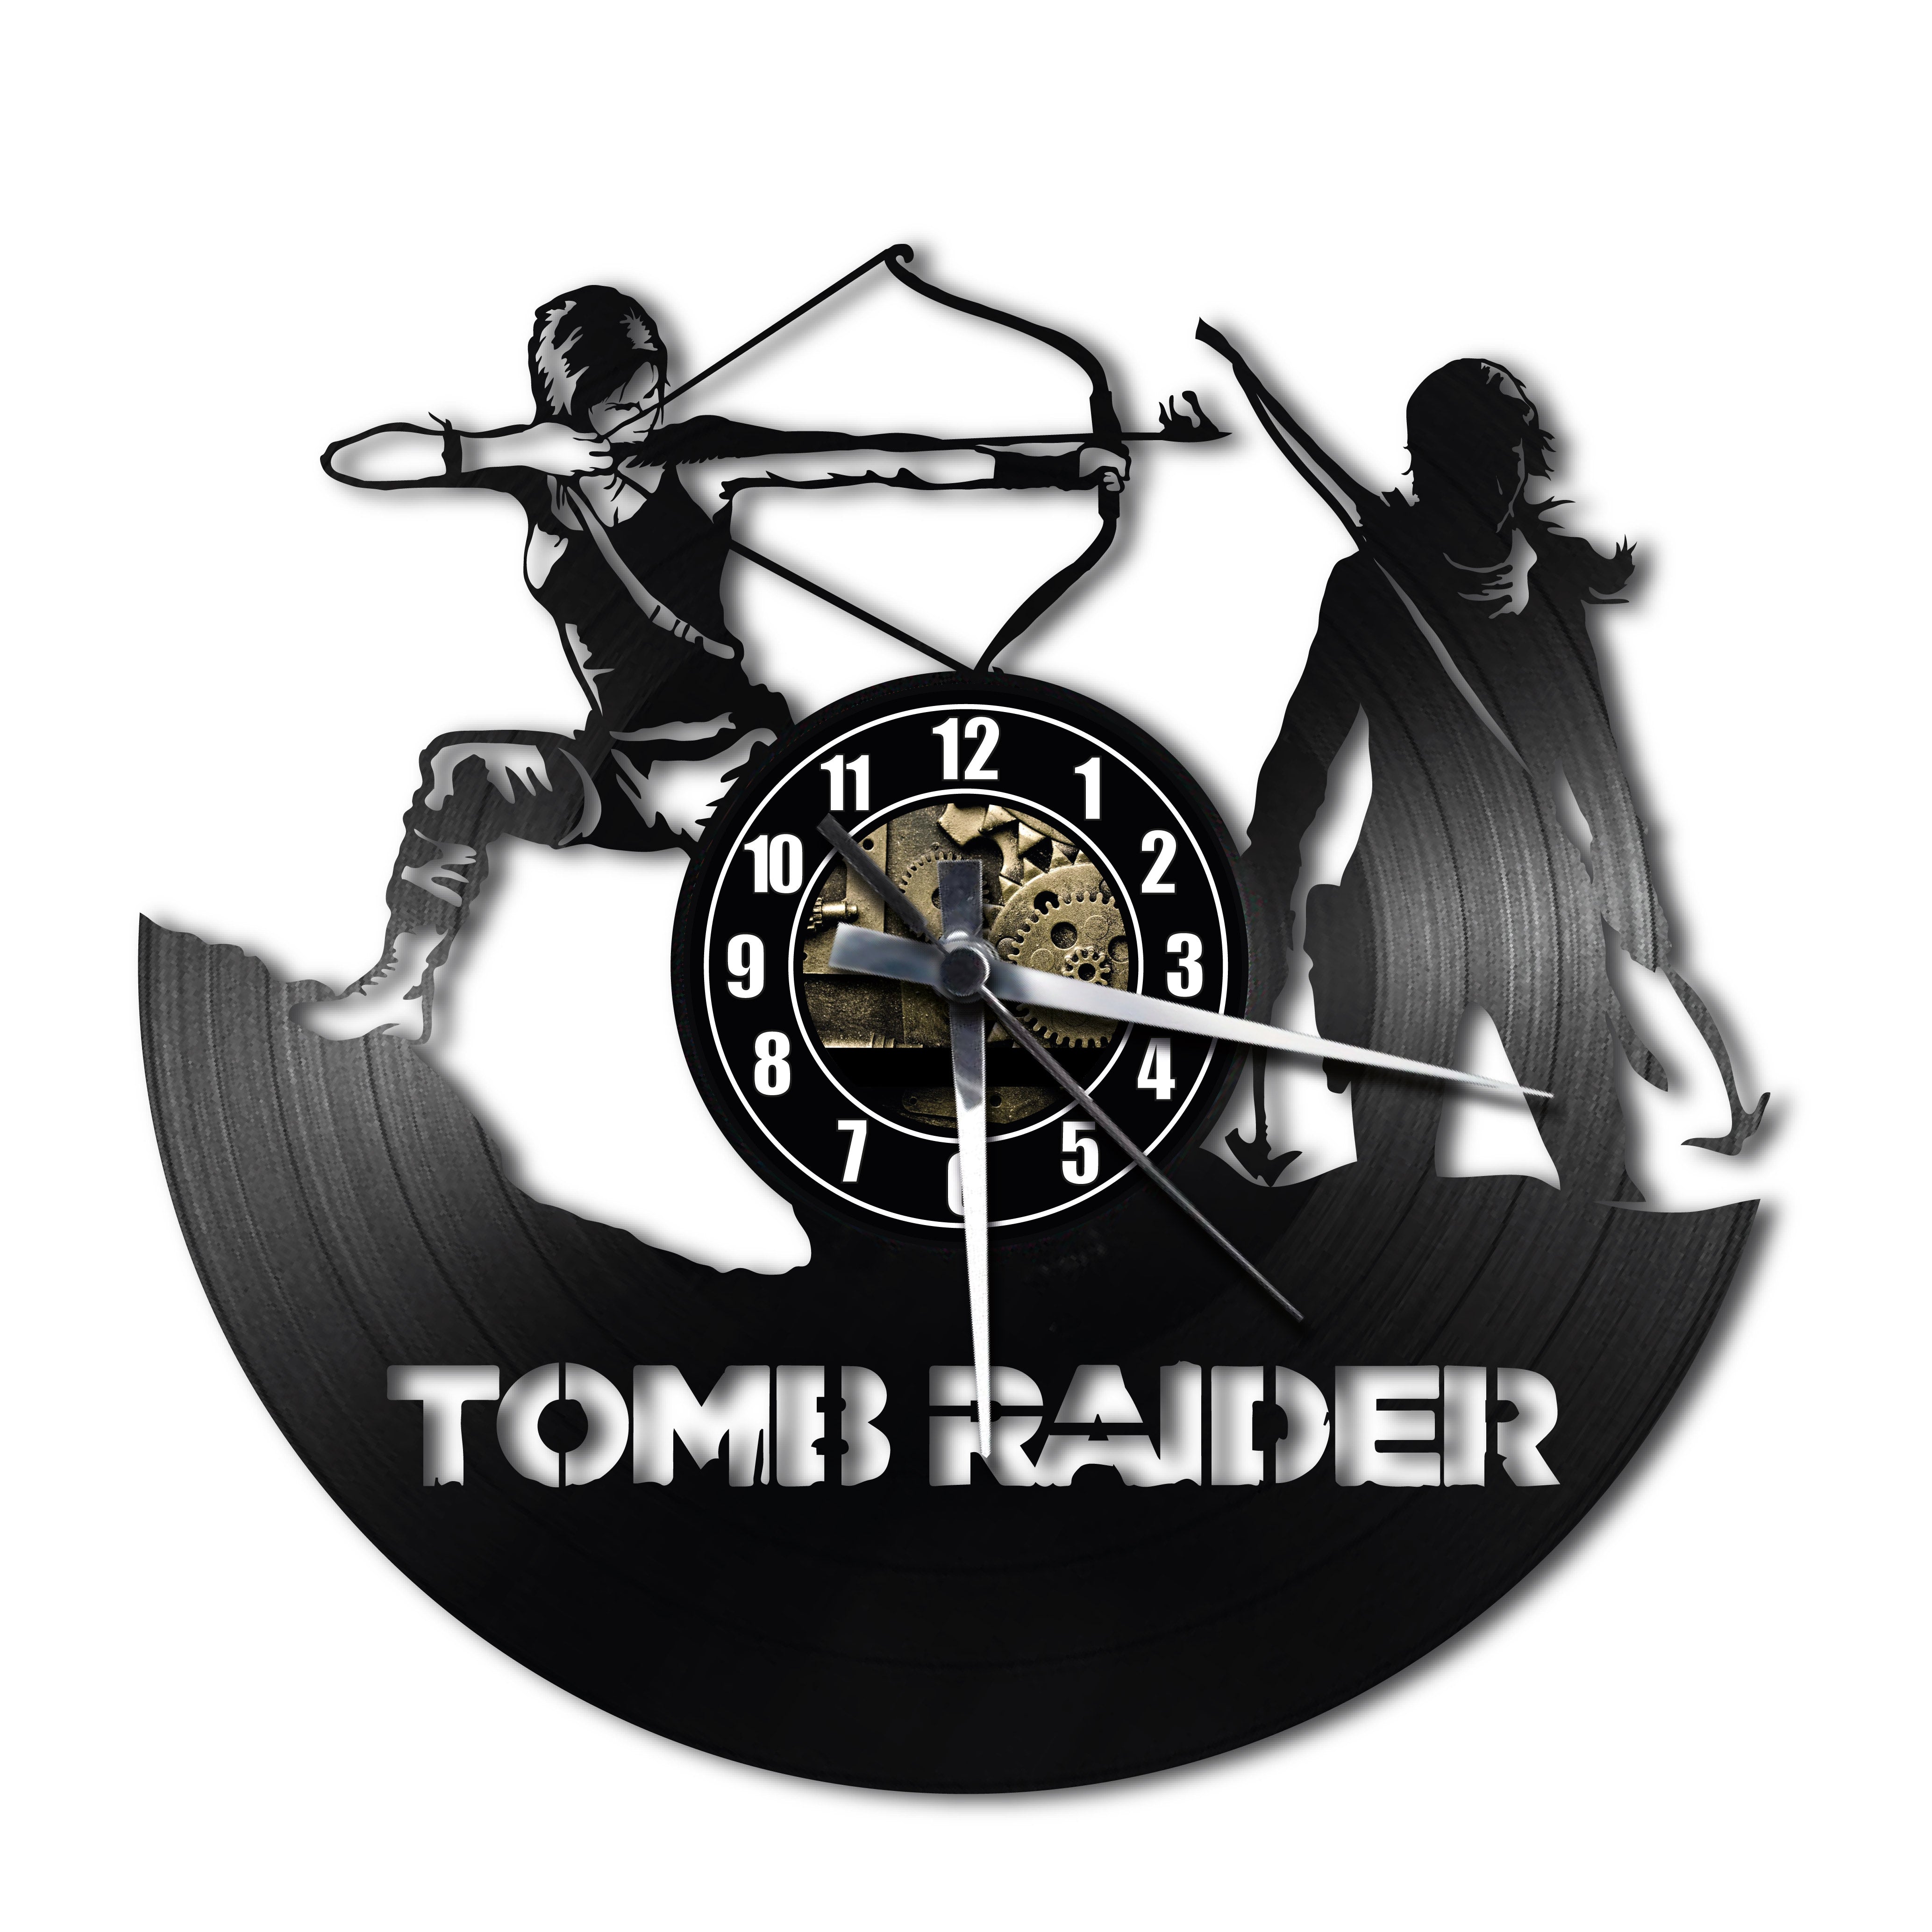 TOMB RAIDER ✦ orologio in vinile